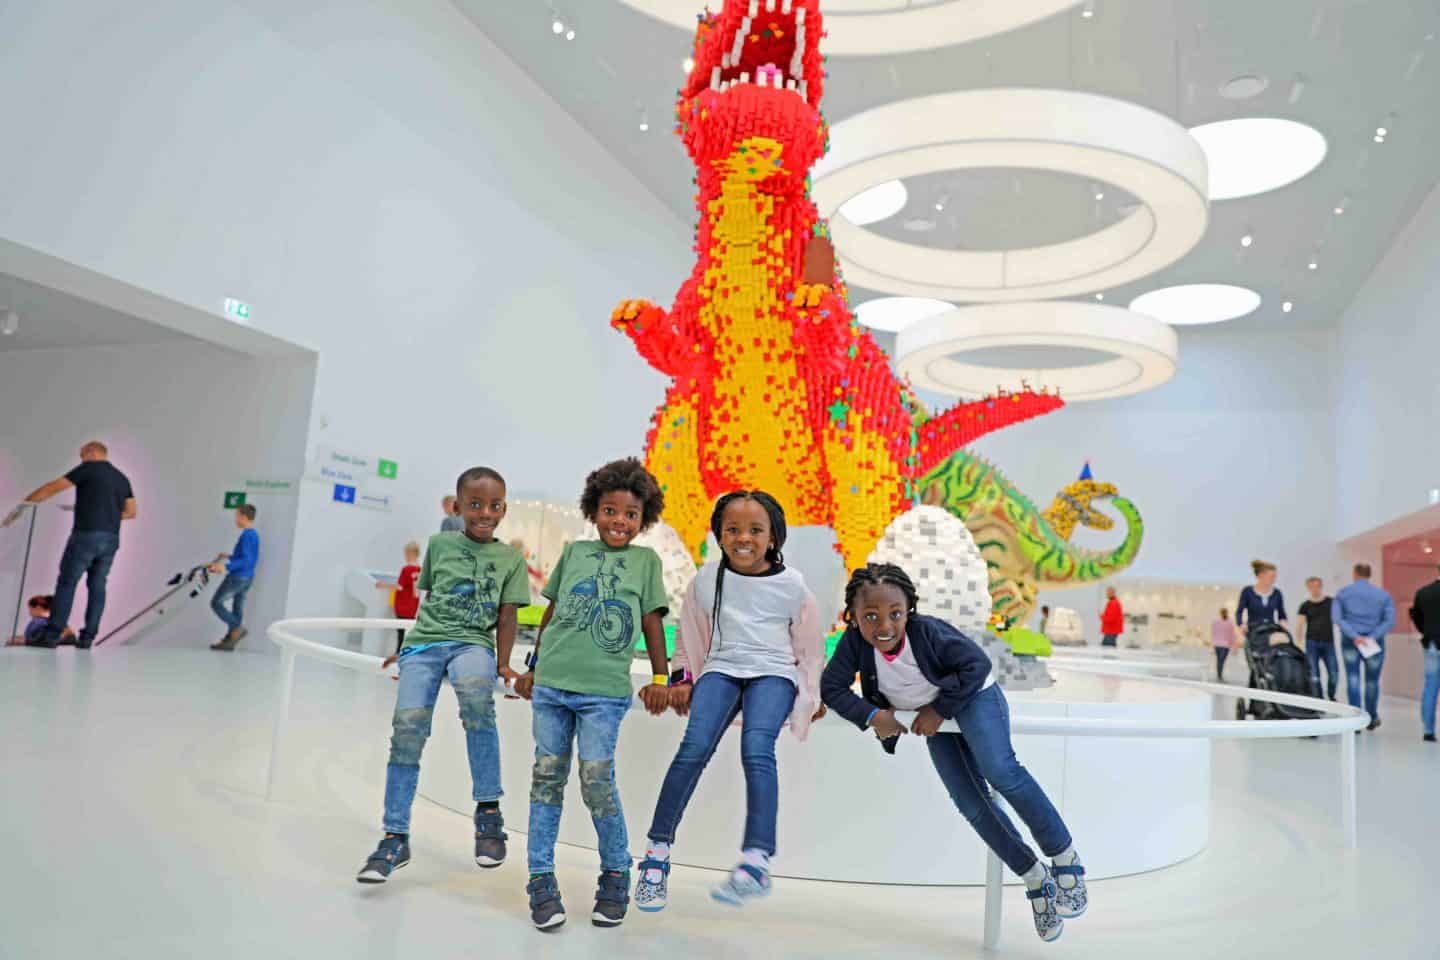 Billund Denmark With Kids The Original Legoland Theme Park and Lego House